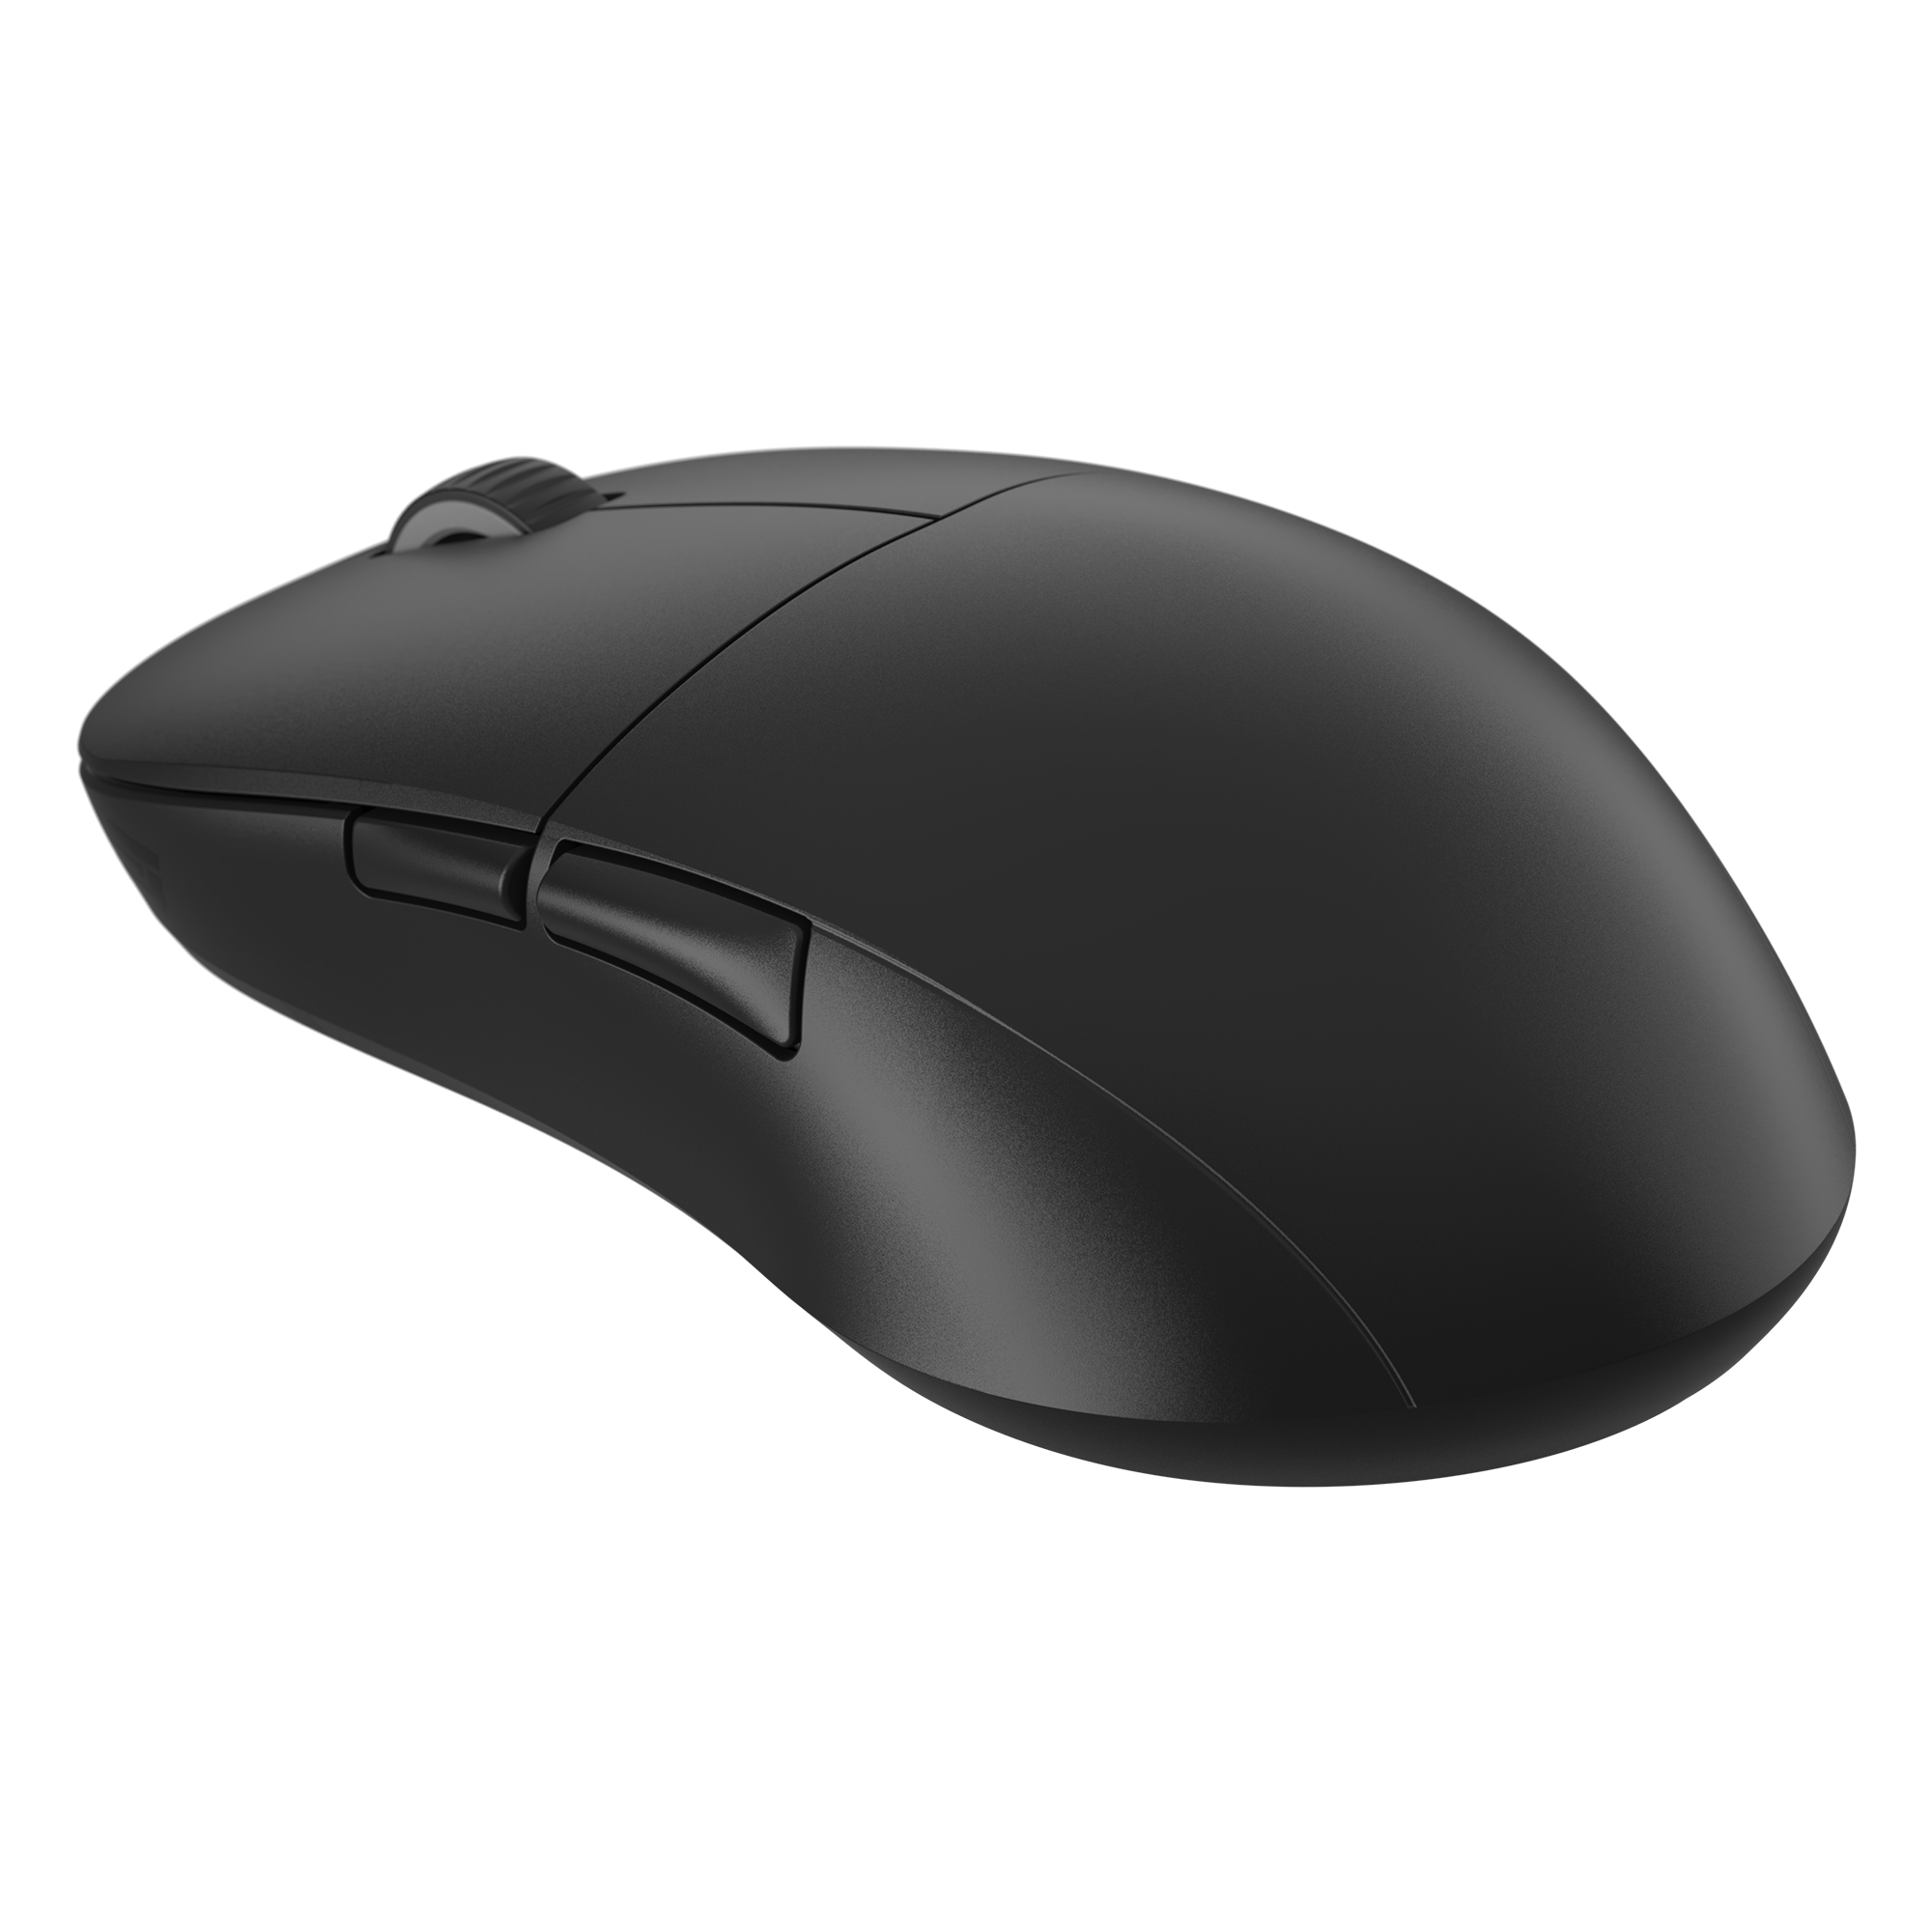 Endgame Gear XM2WE Wireless Optical Lightweight Gaming Mouse - Black (EGG-XM2WE-BLK)